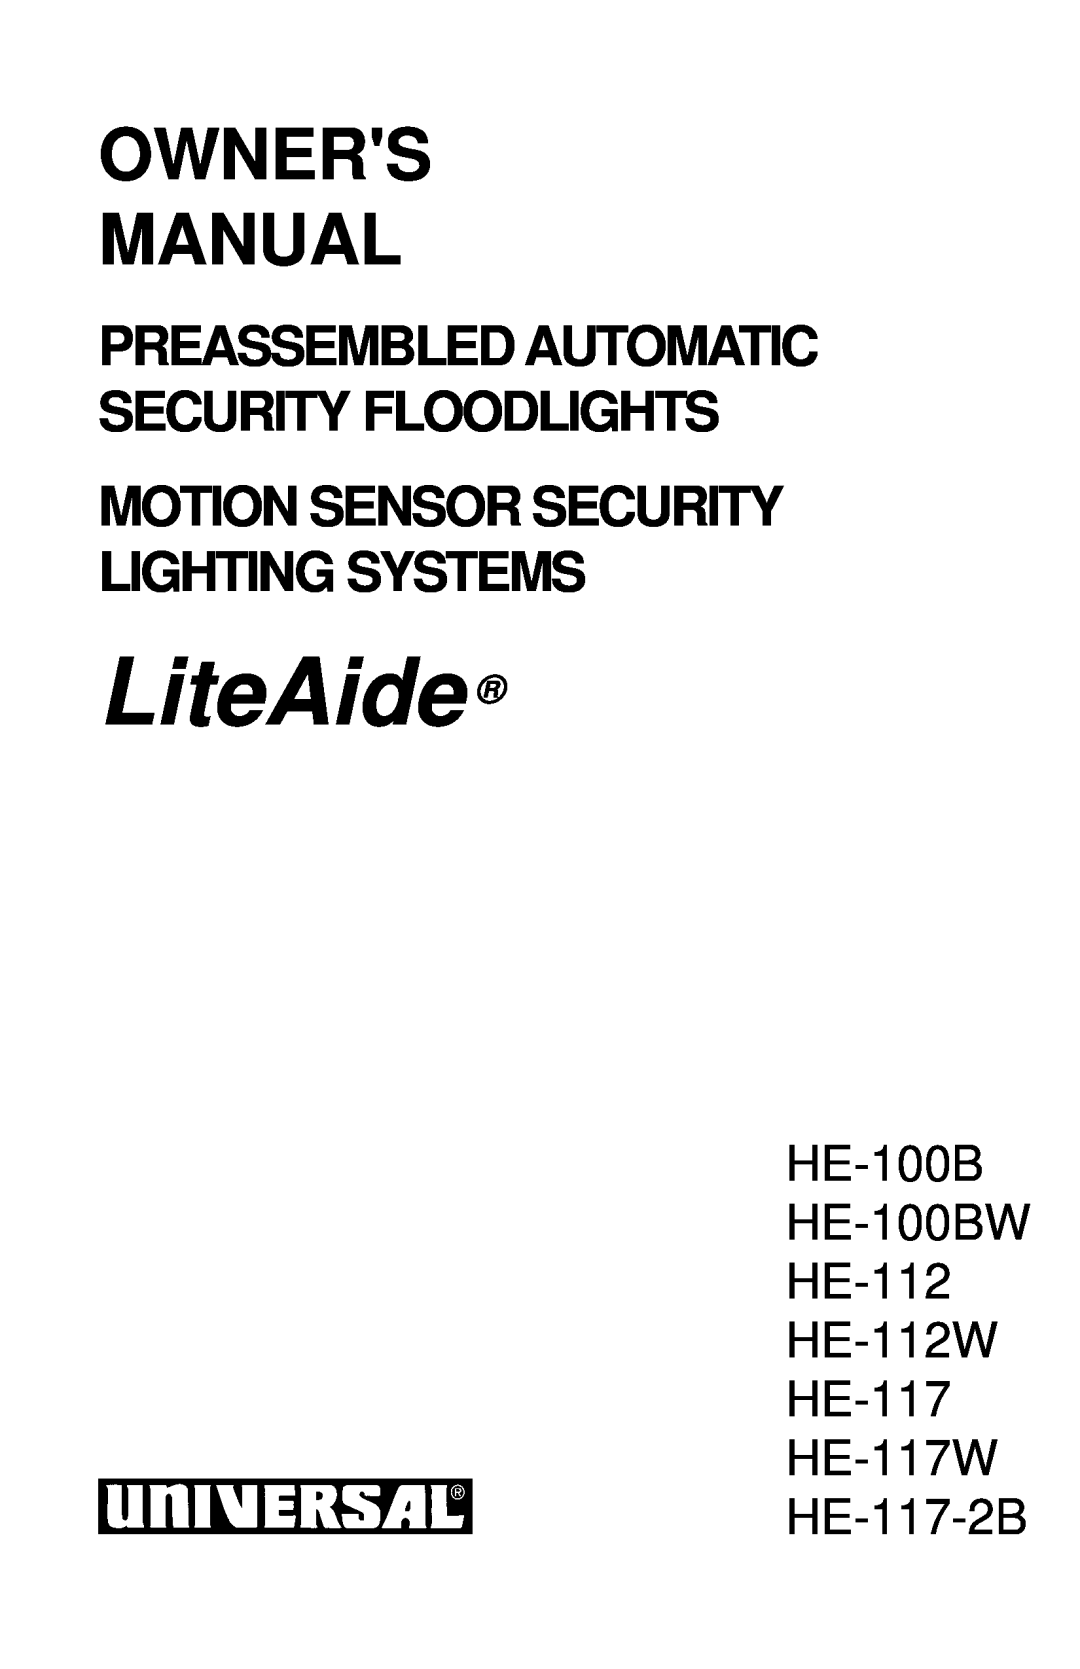 Universal HE-112W, HE-100BW, HE-117W owner manual LiteAide, Motion Sensor Security Lighting Systems, HE-117-2B 